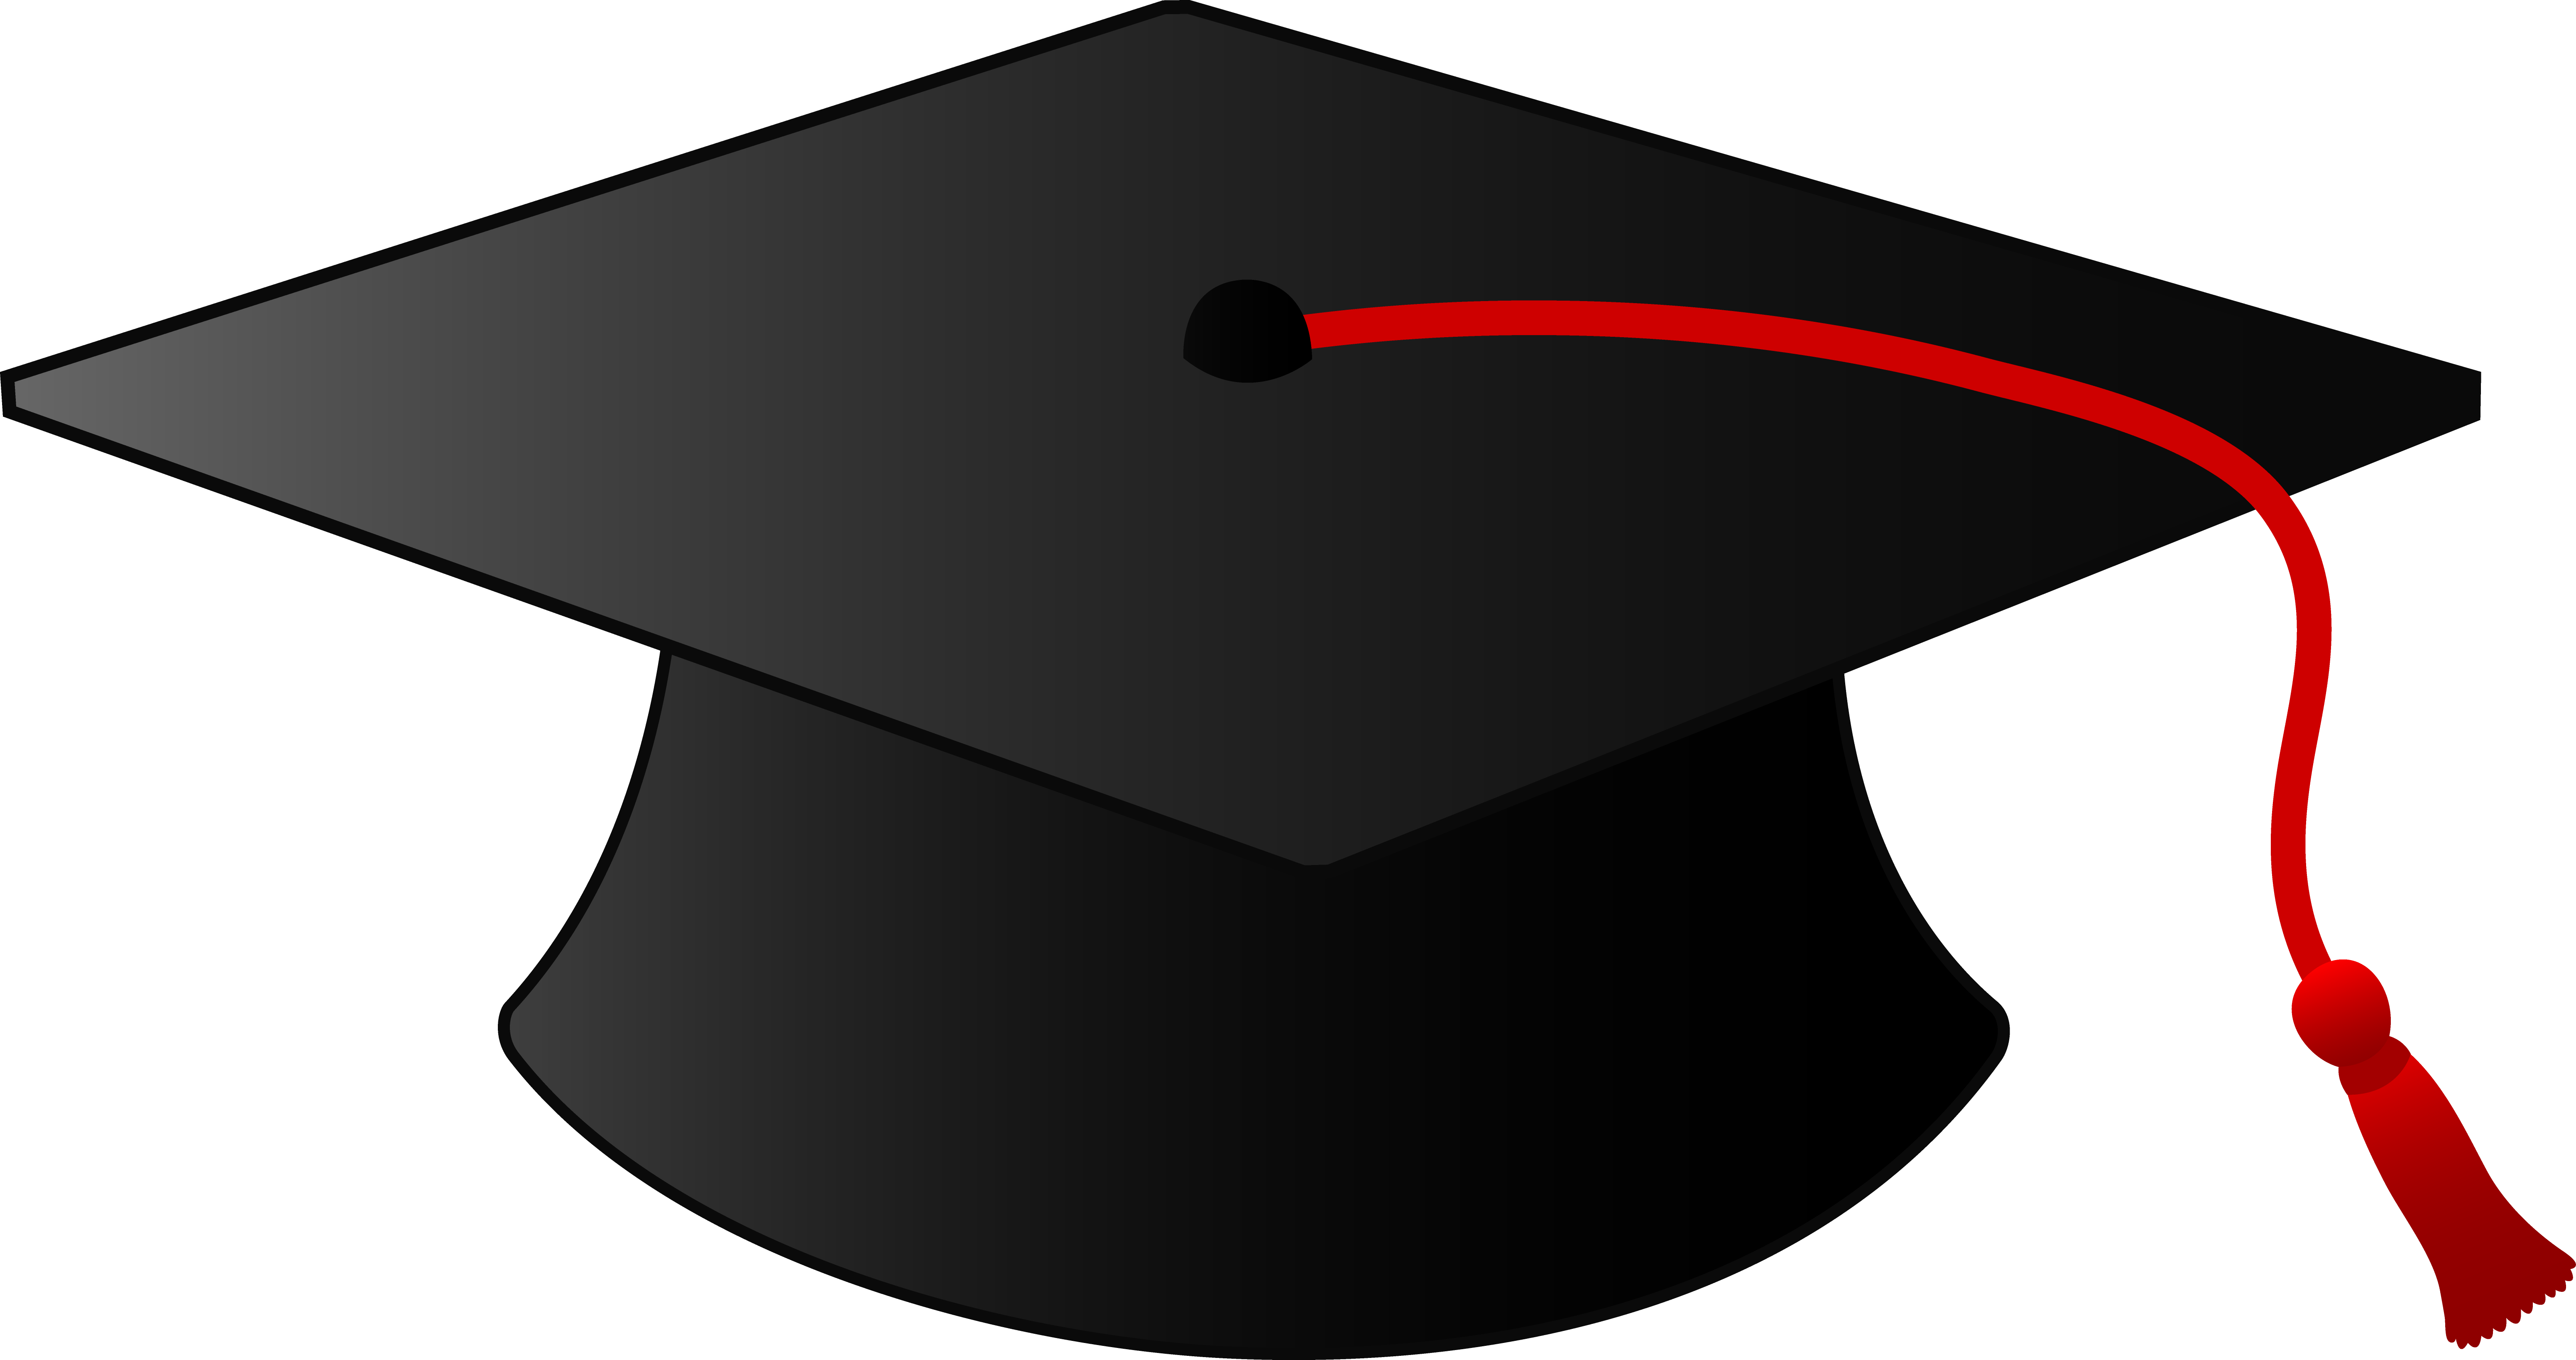 File:Graduation cap.png - Wik